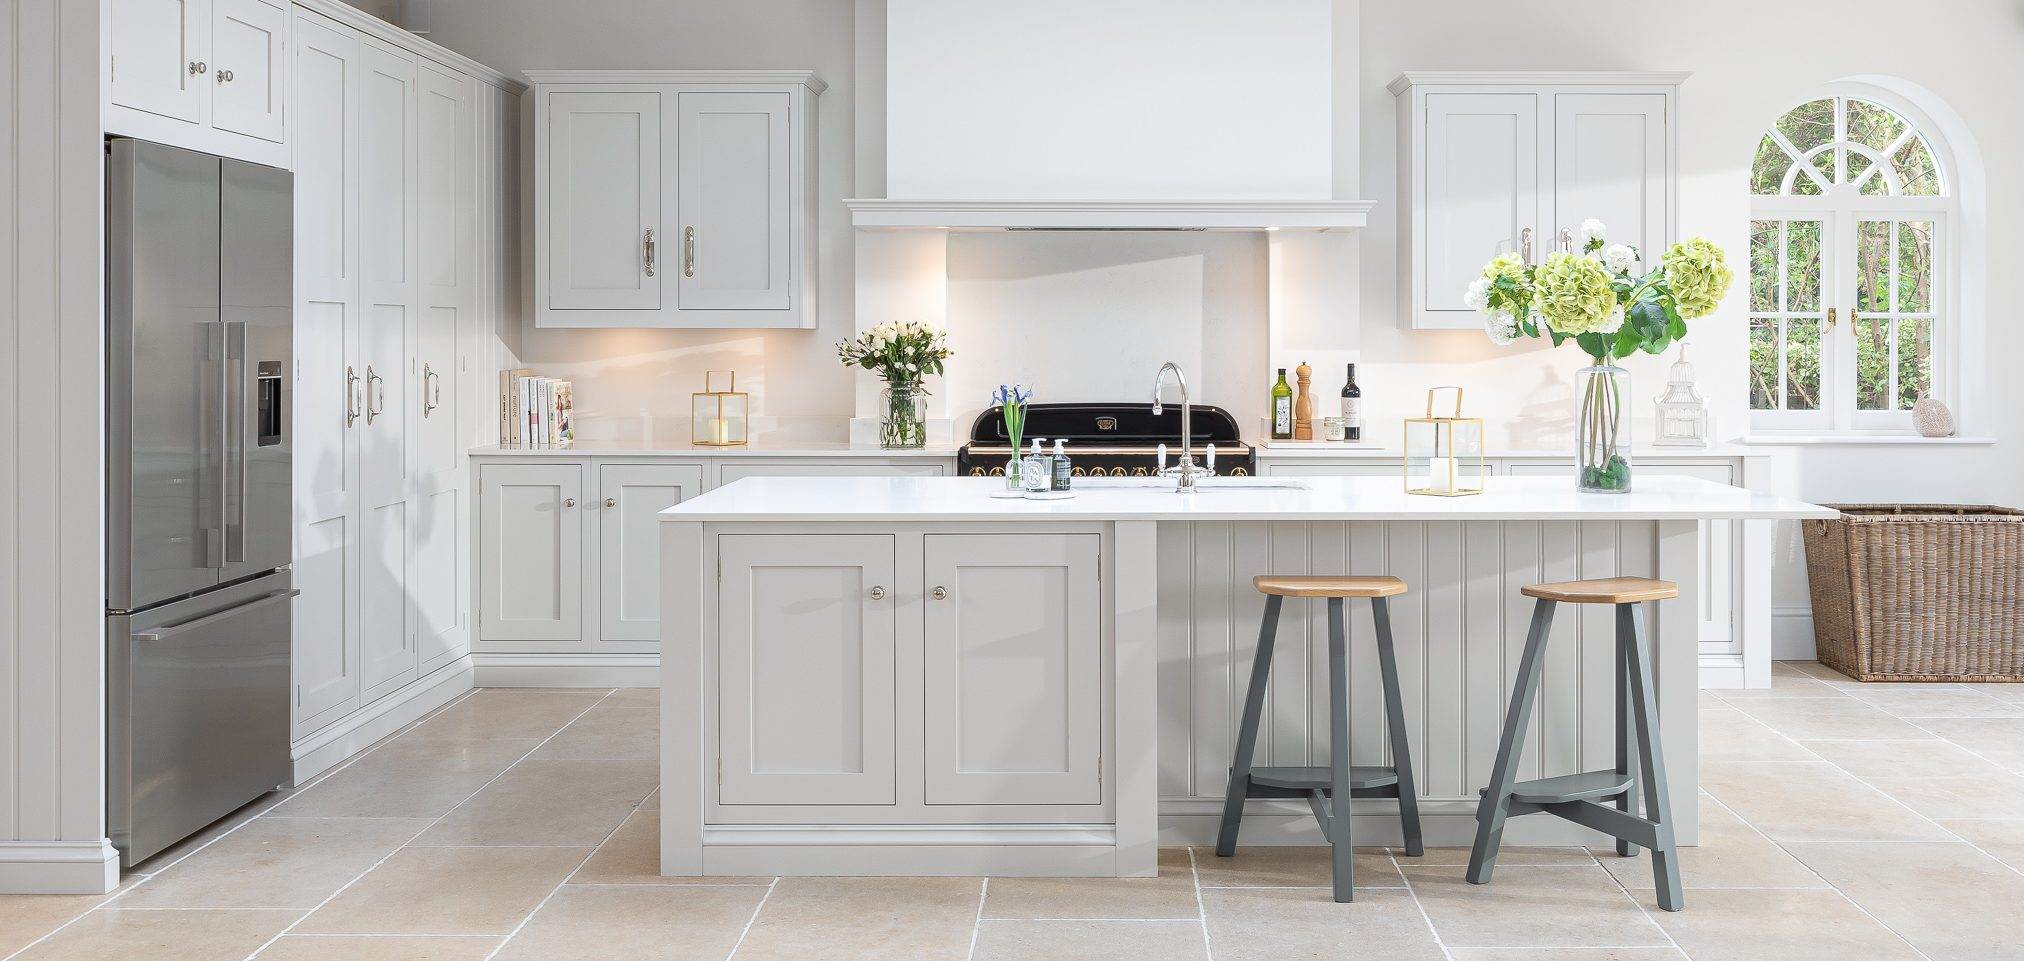 grey kitchen with silver apppliances, white kitchen island, chairs and sink